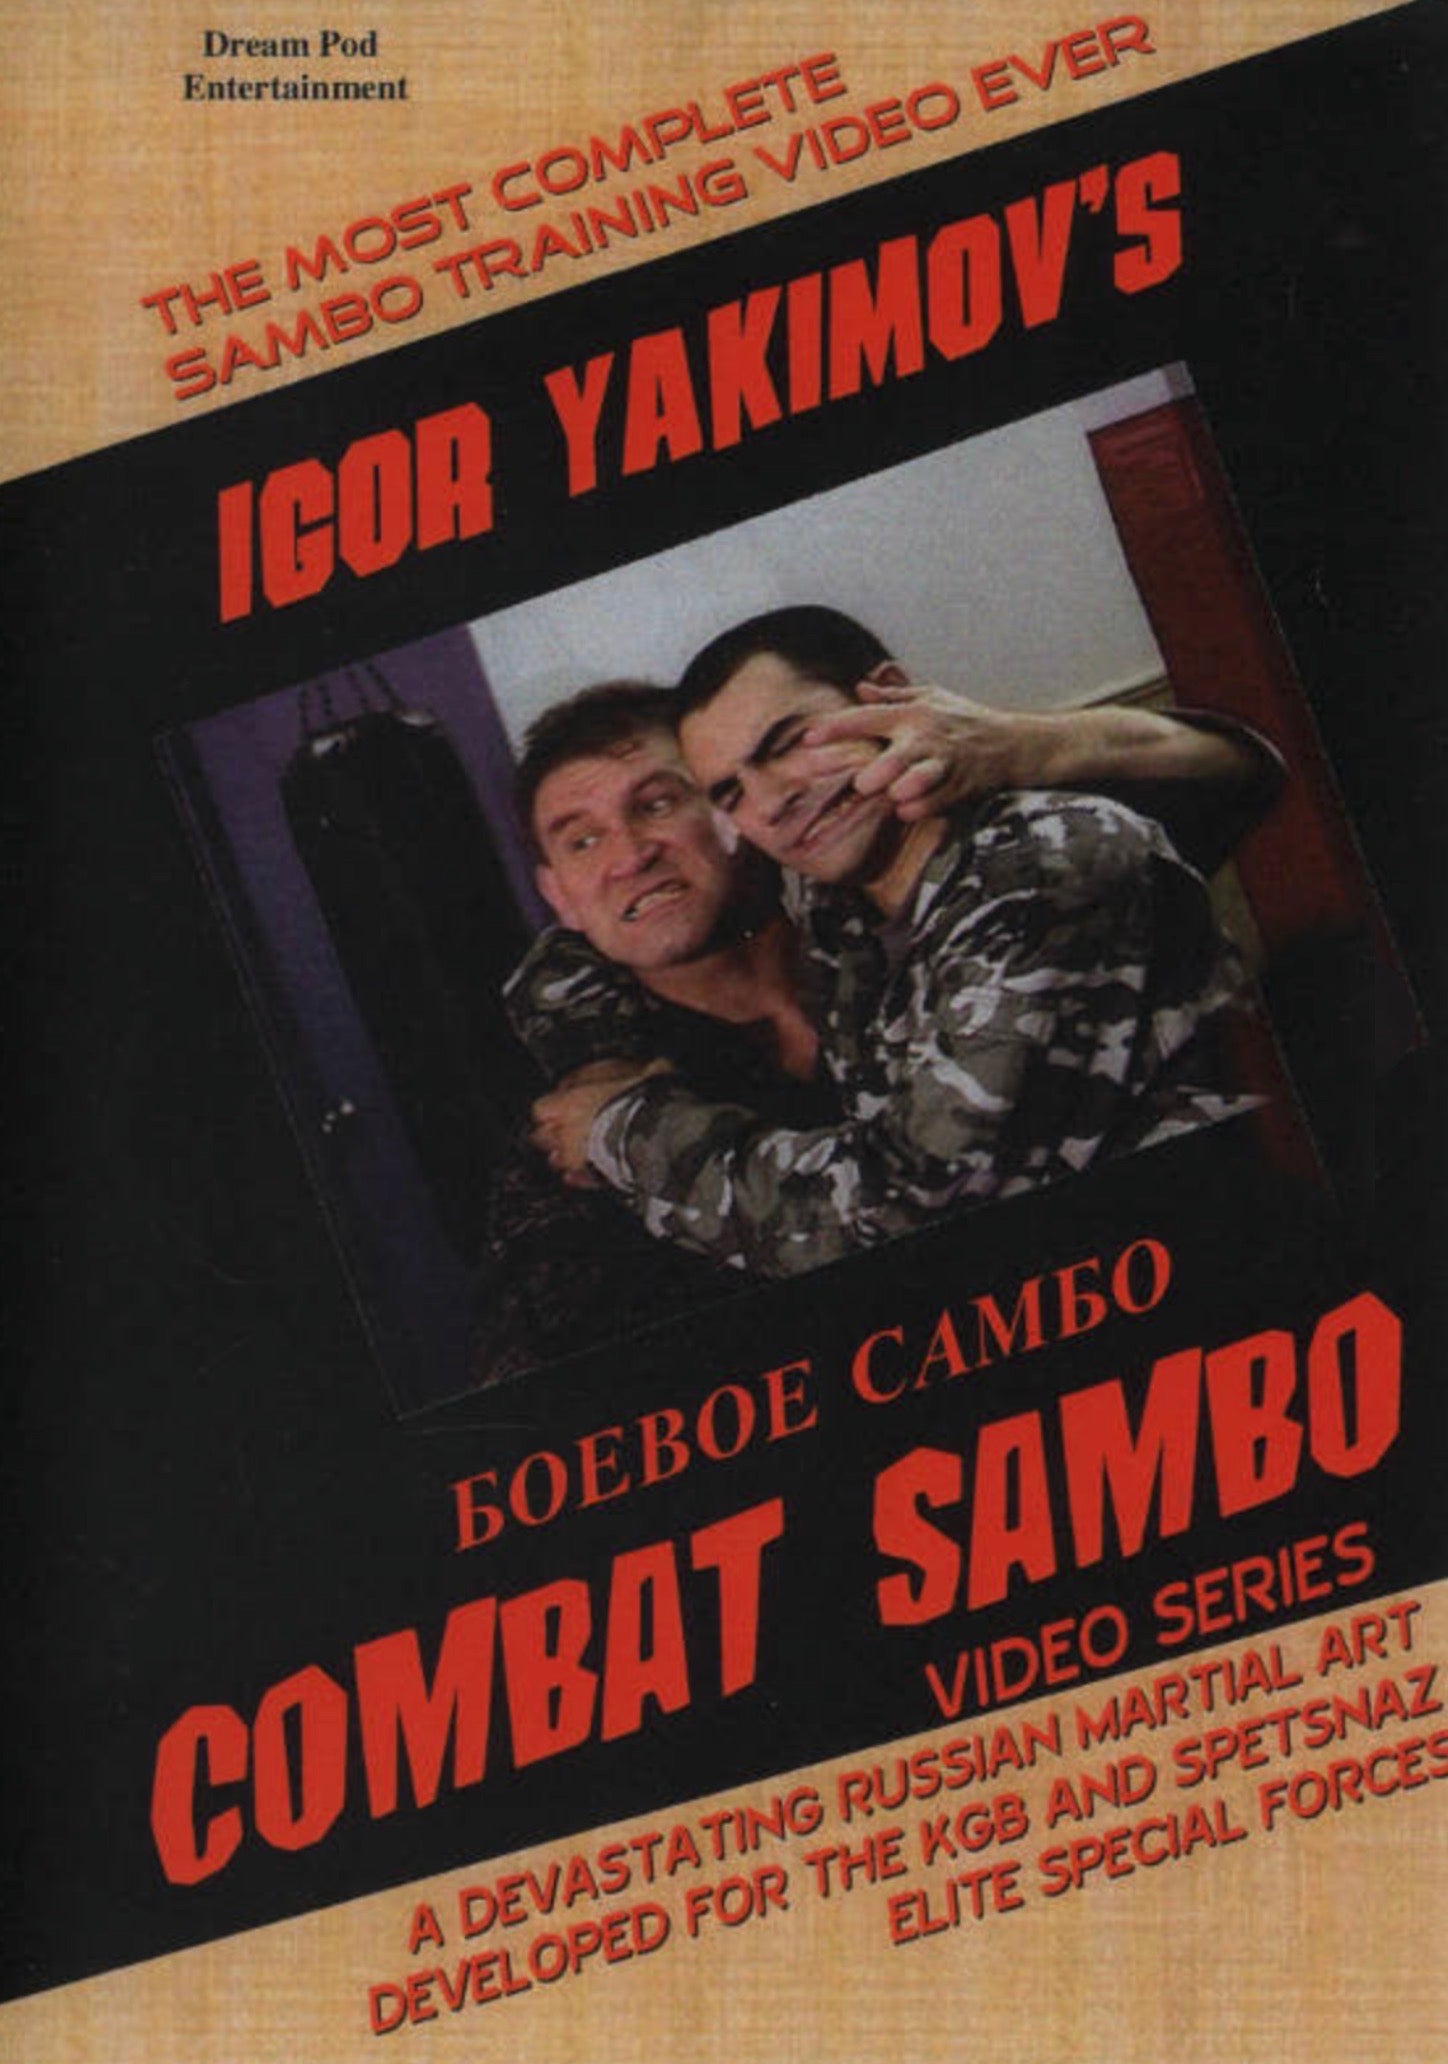 Serie Combat Sambo de Igor Yakimov (bajo demanda)